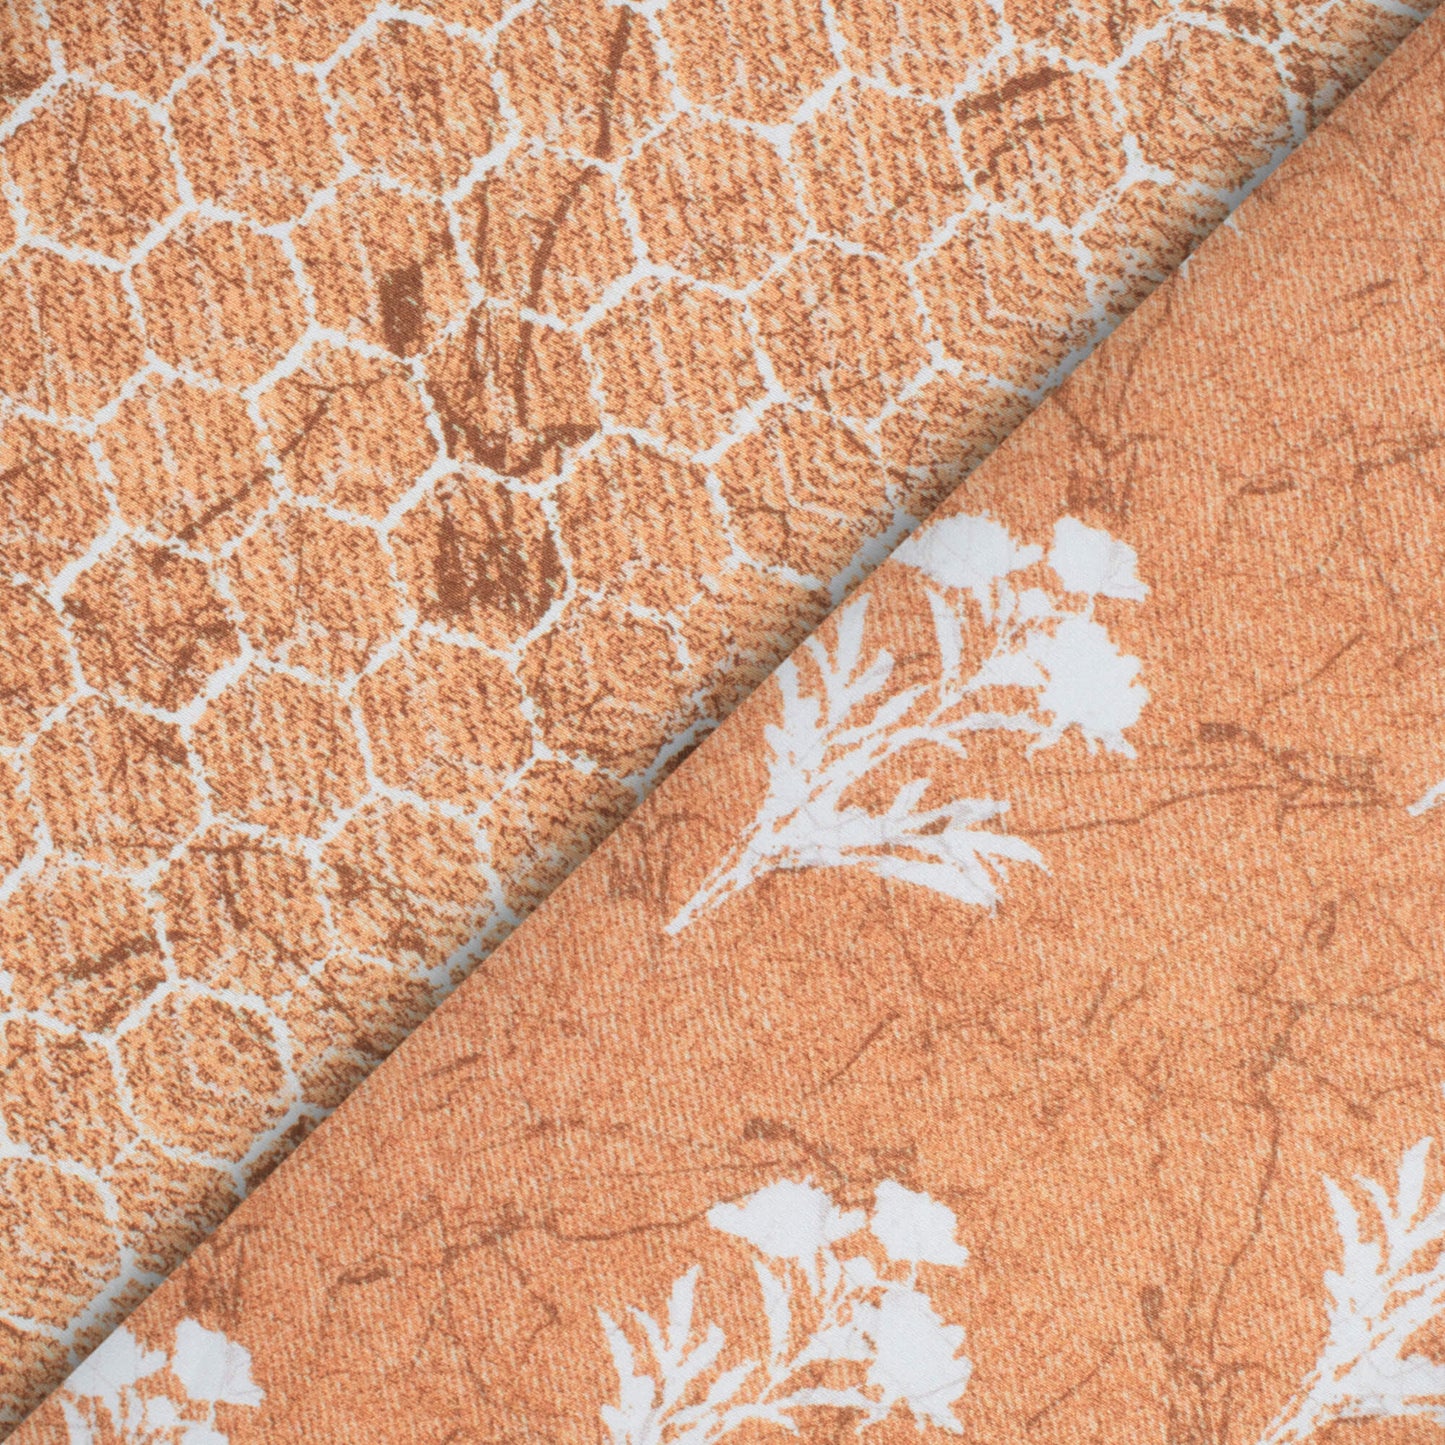 Sable Brown And White Floral Pattern Digital Print Premium Lush Satin Fabric